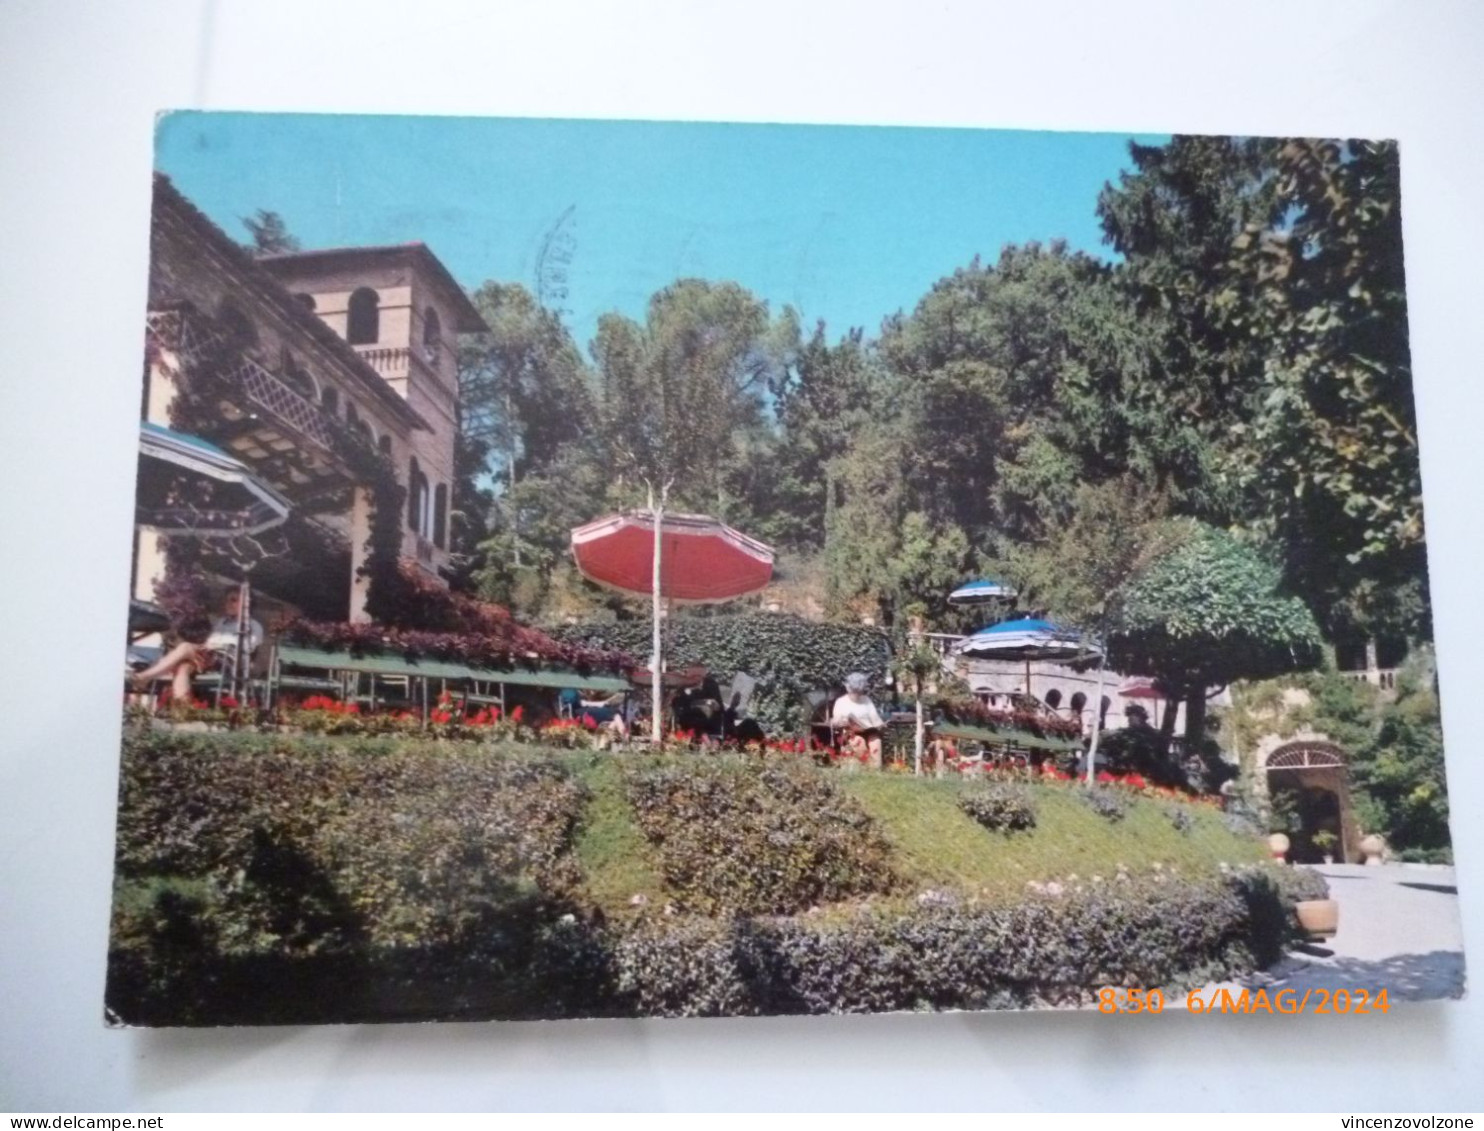 Cartolina Viaggiata "CHIANCIANO TERME Sorgente S. Elena - Parco" 1973 - Siena